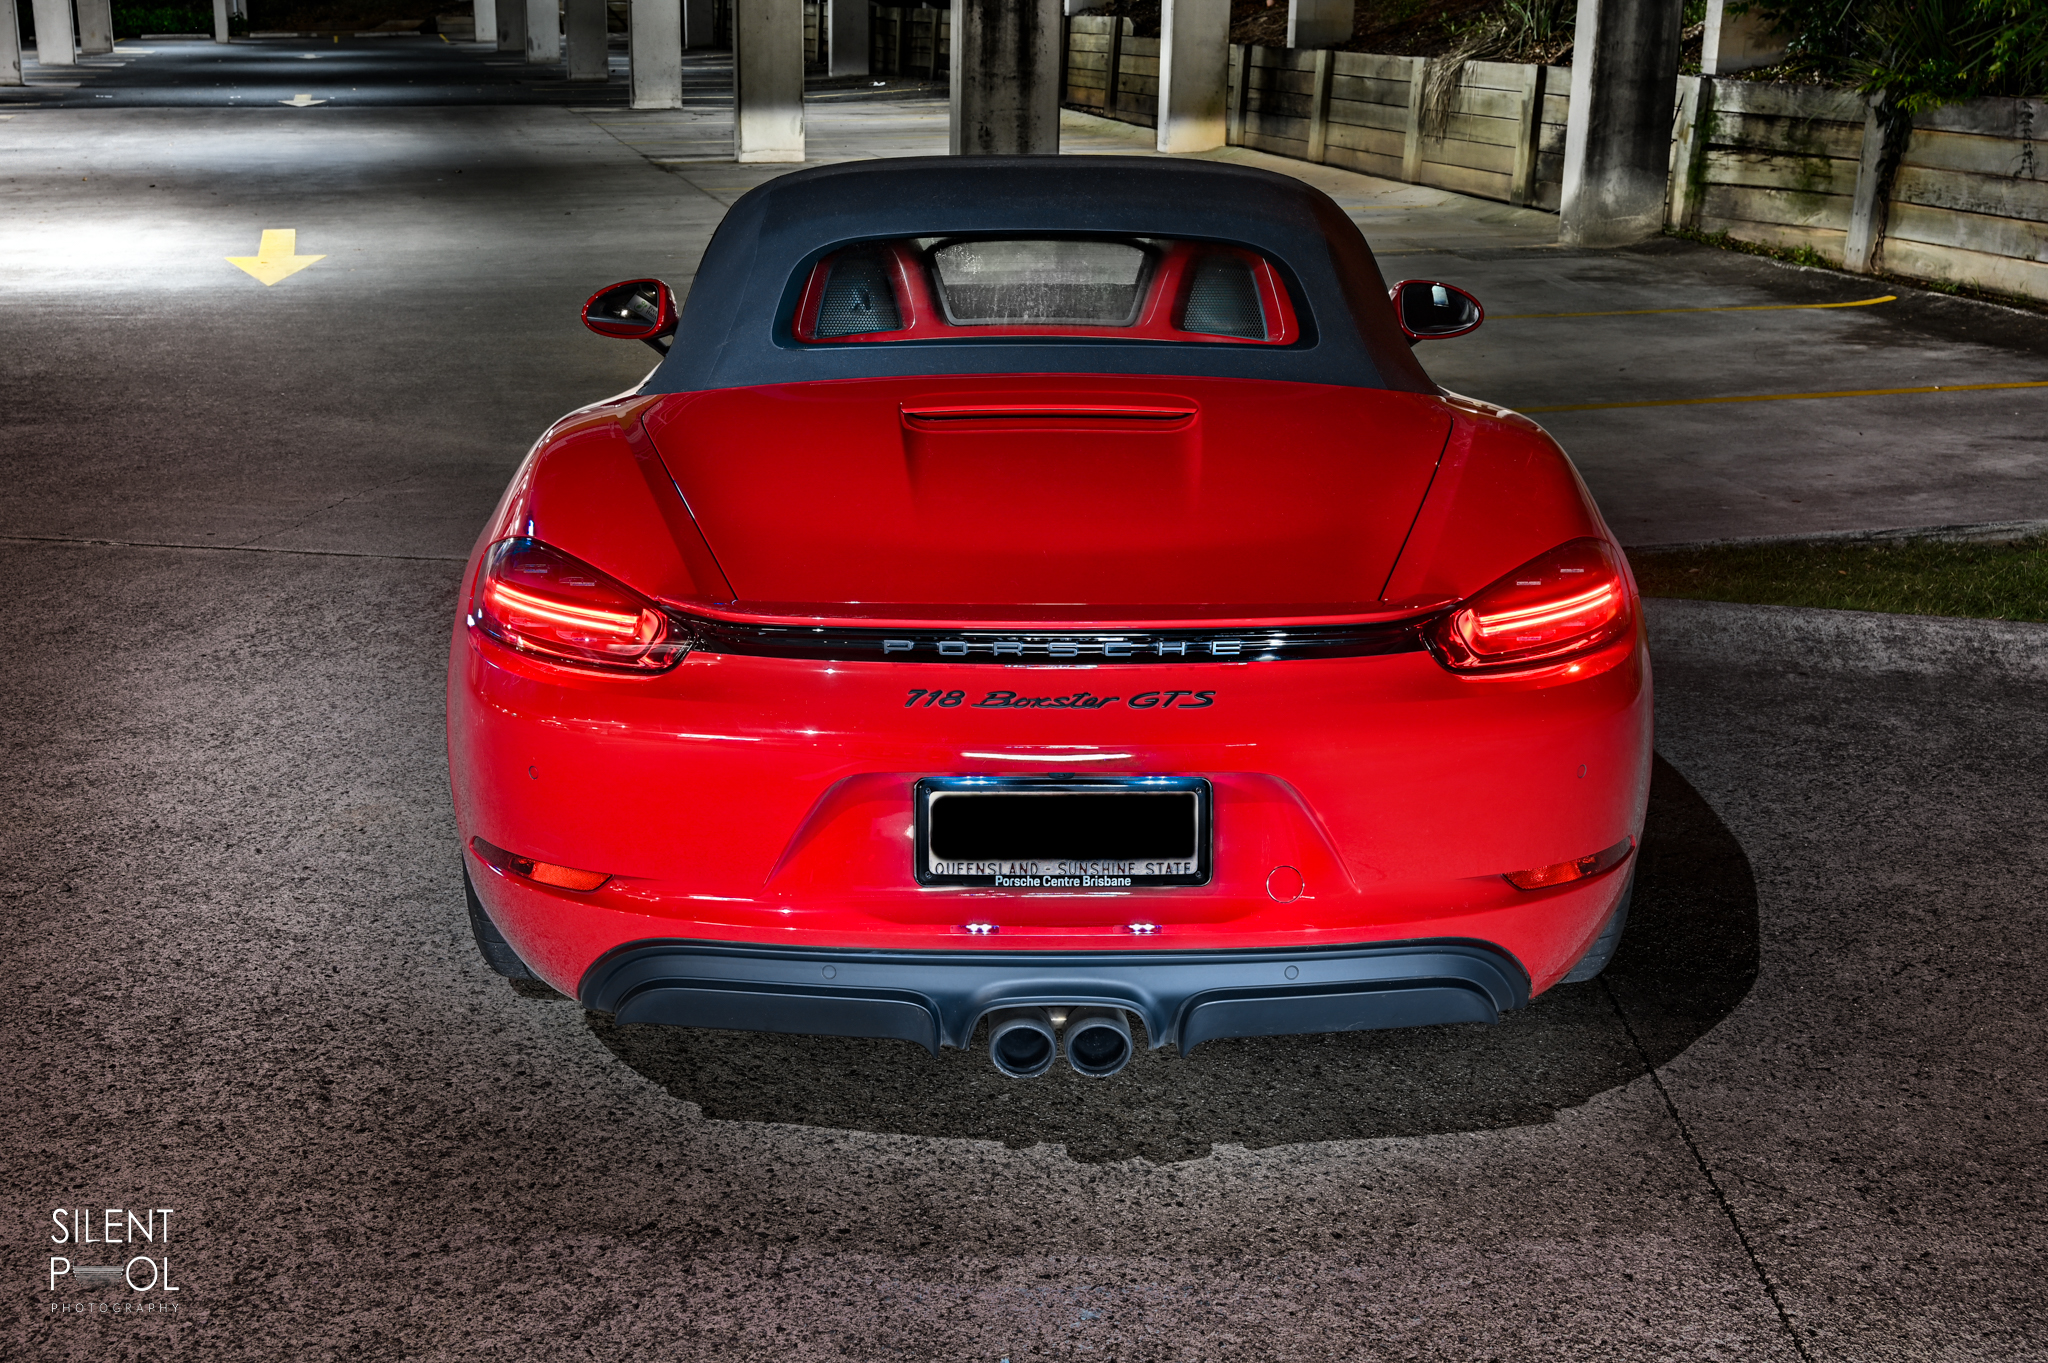 Porsche Luxury Sports Car Night Time Photograph